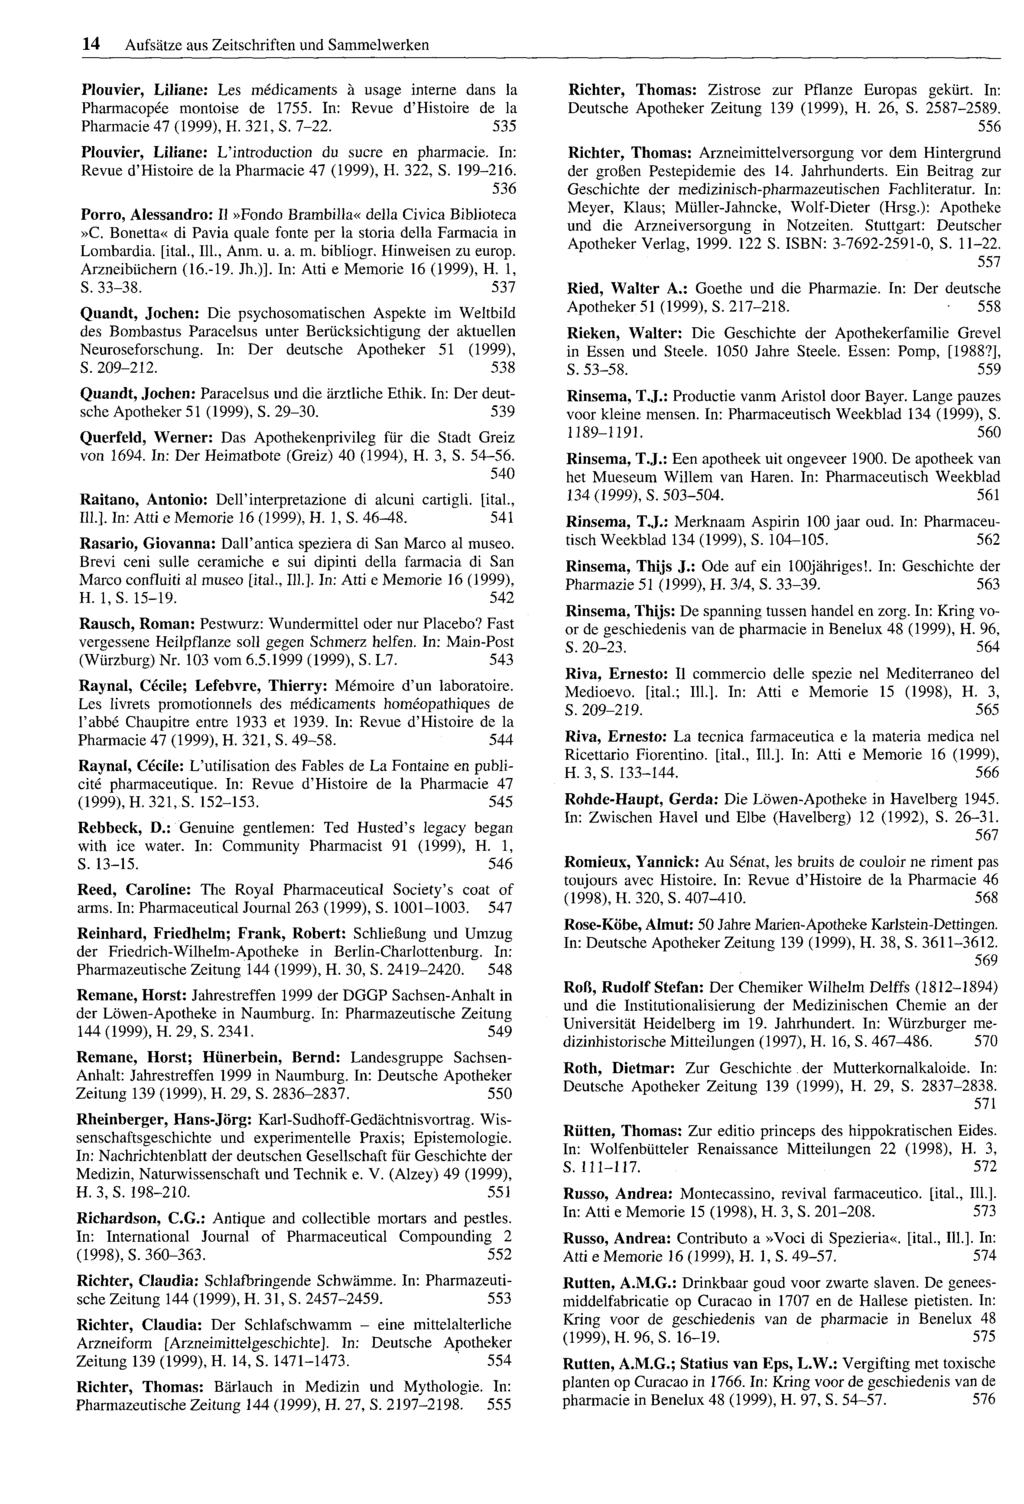 14 Aufsätze aus Zeitschriften und Sammelwerken Plouvier, Liliane: Les medicaments a usage interne dans Ja Pharmacopee montoise de 1755. In: Revue d'histoire de Ja Pharmacie 47 (1999), H. 321, S. 7-22.